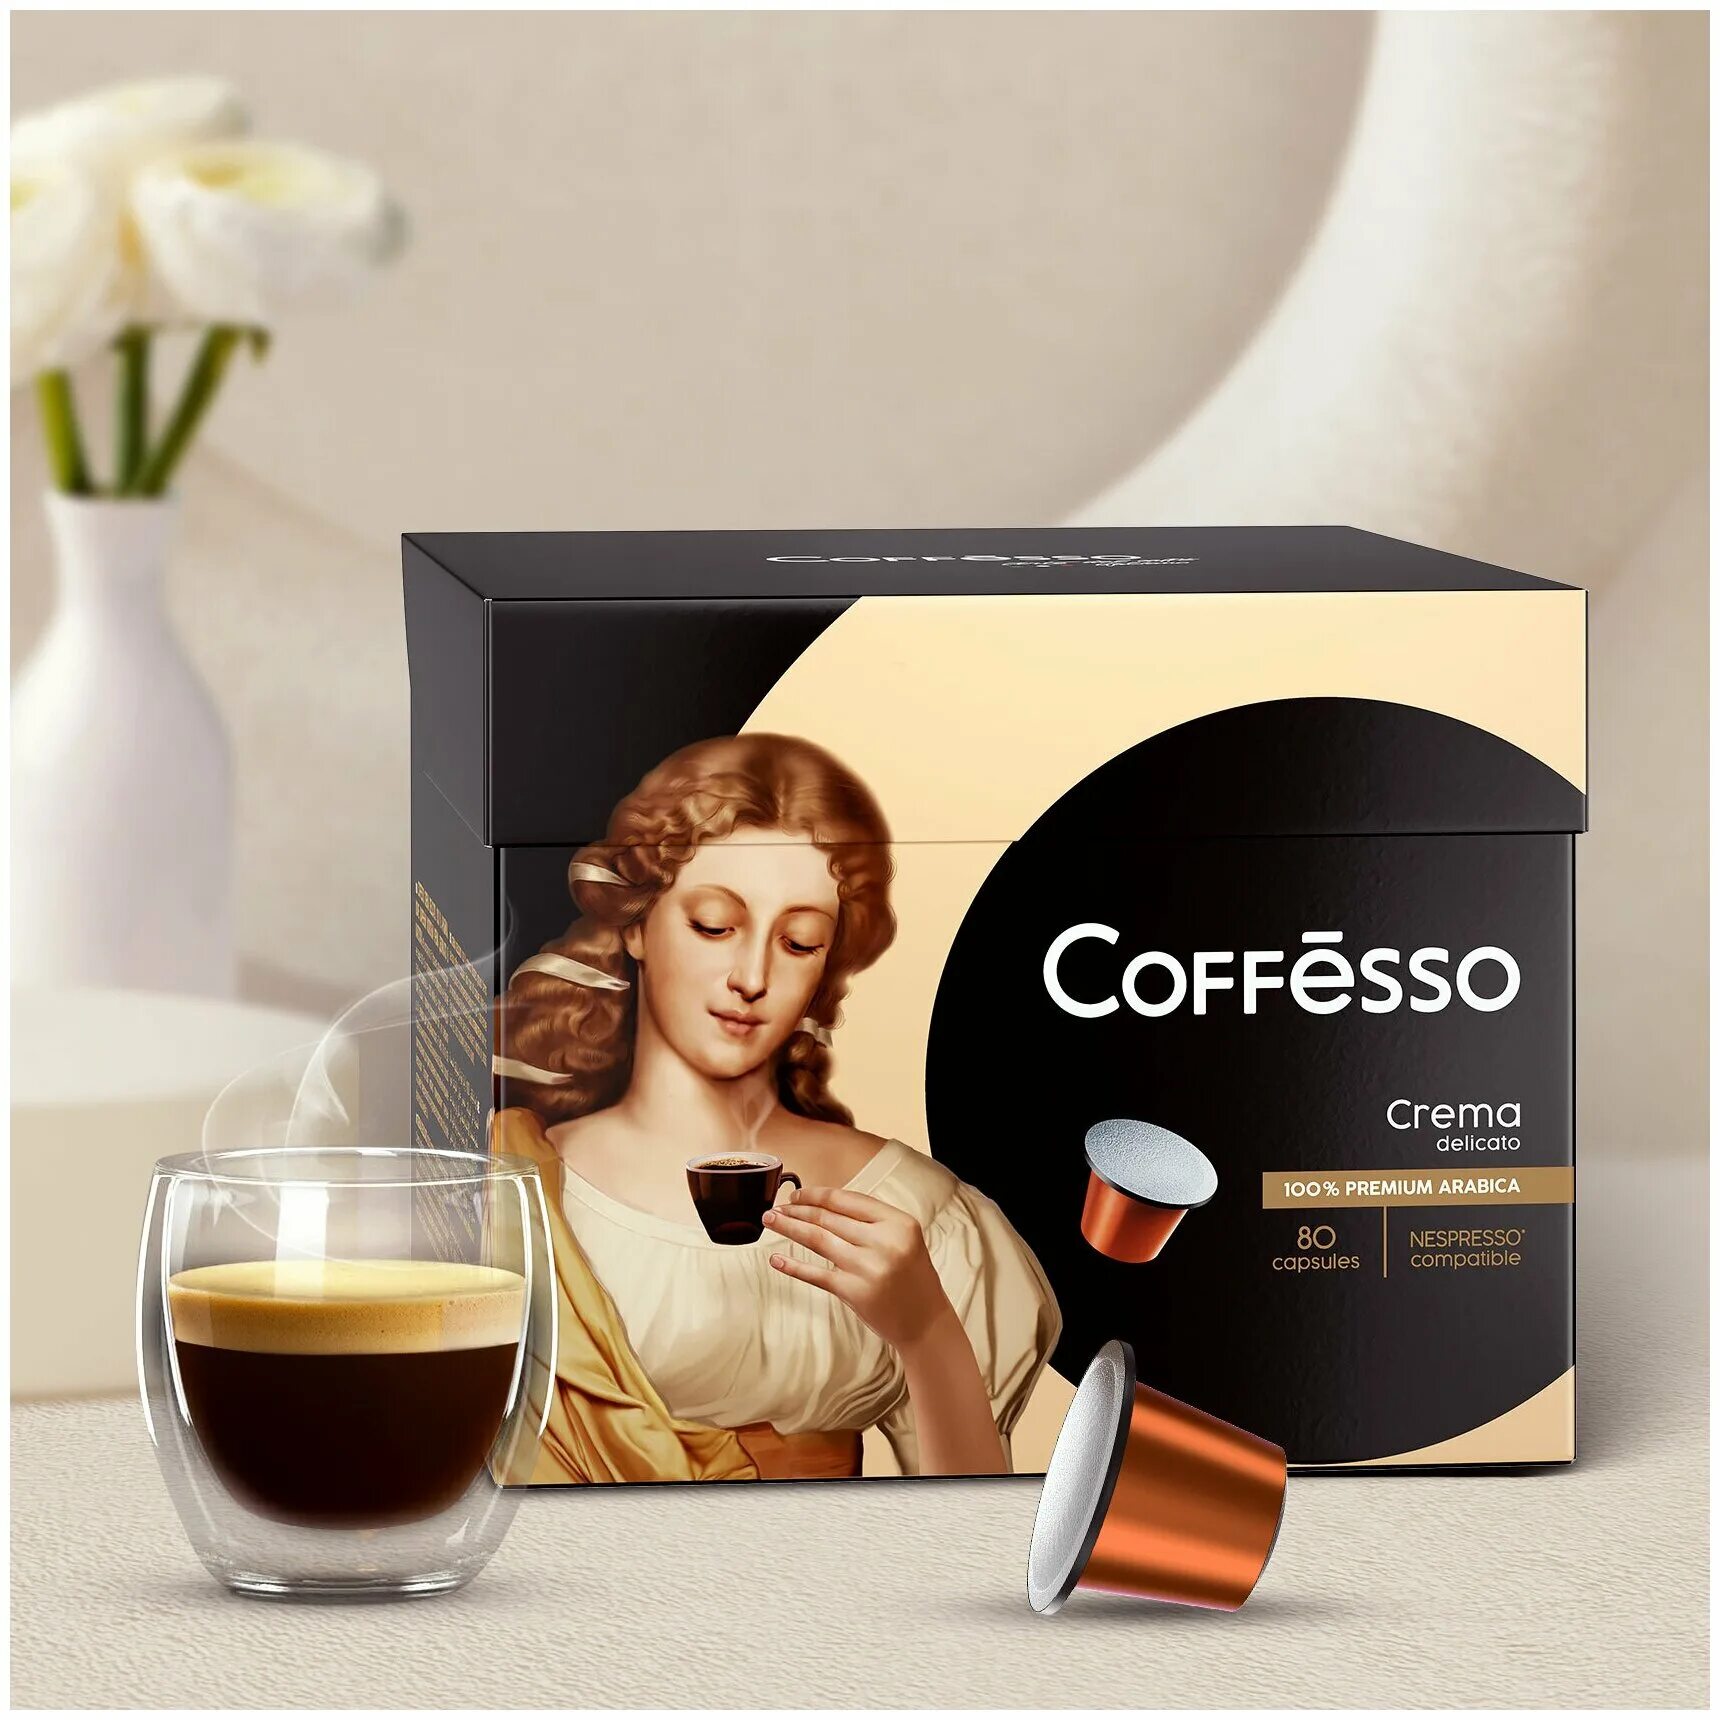 Coffesso купить. Coffesso crema delicato капсулы. Кофе Coffesso crema delicato. Coffesso 80 капсул. Кофе в капсулах Coffesso набор кофе"".